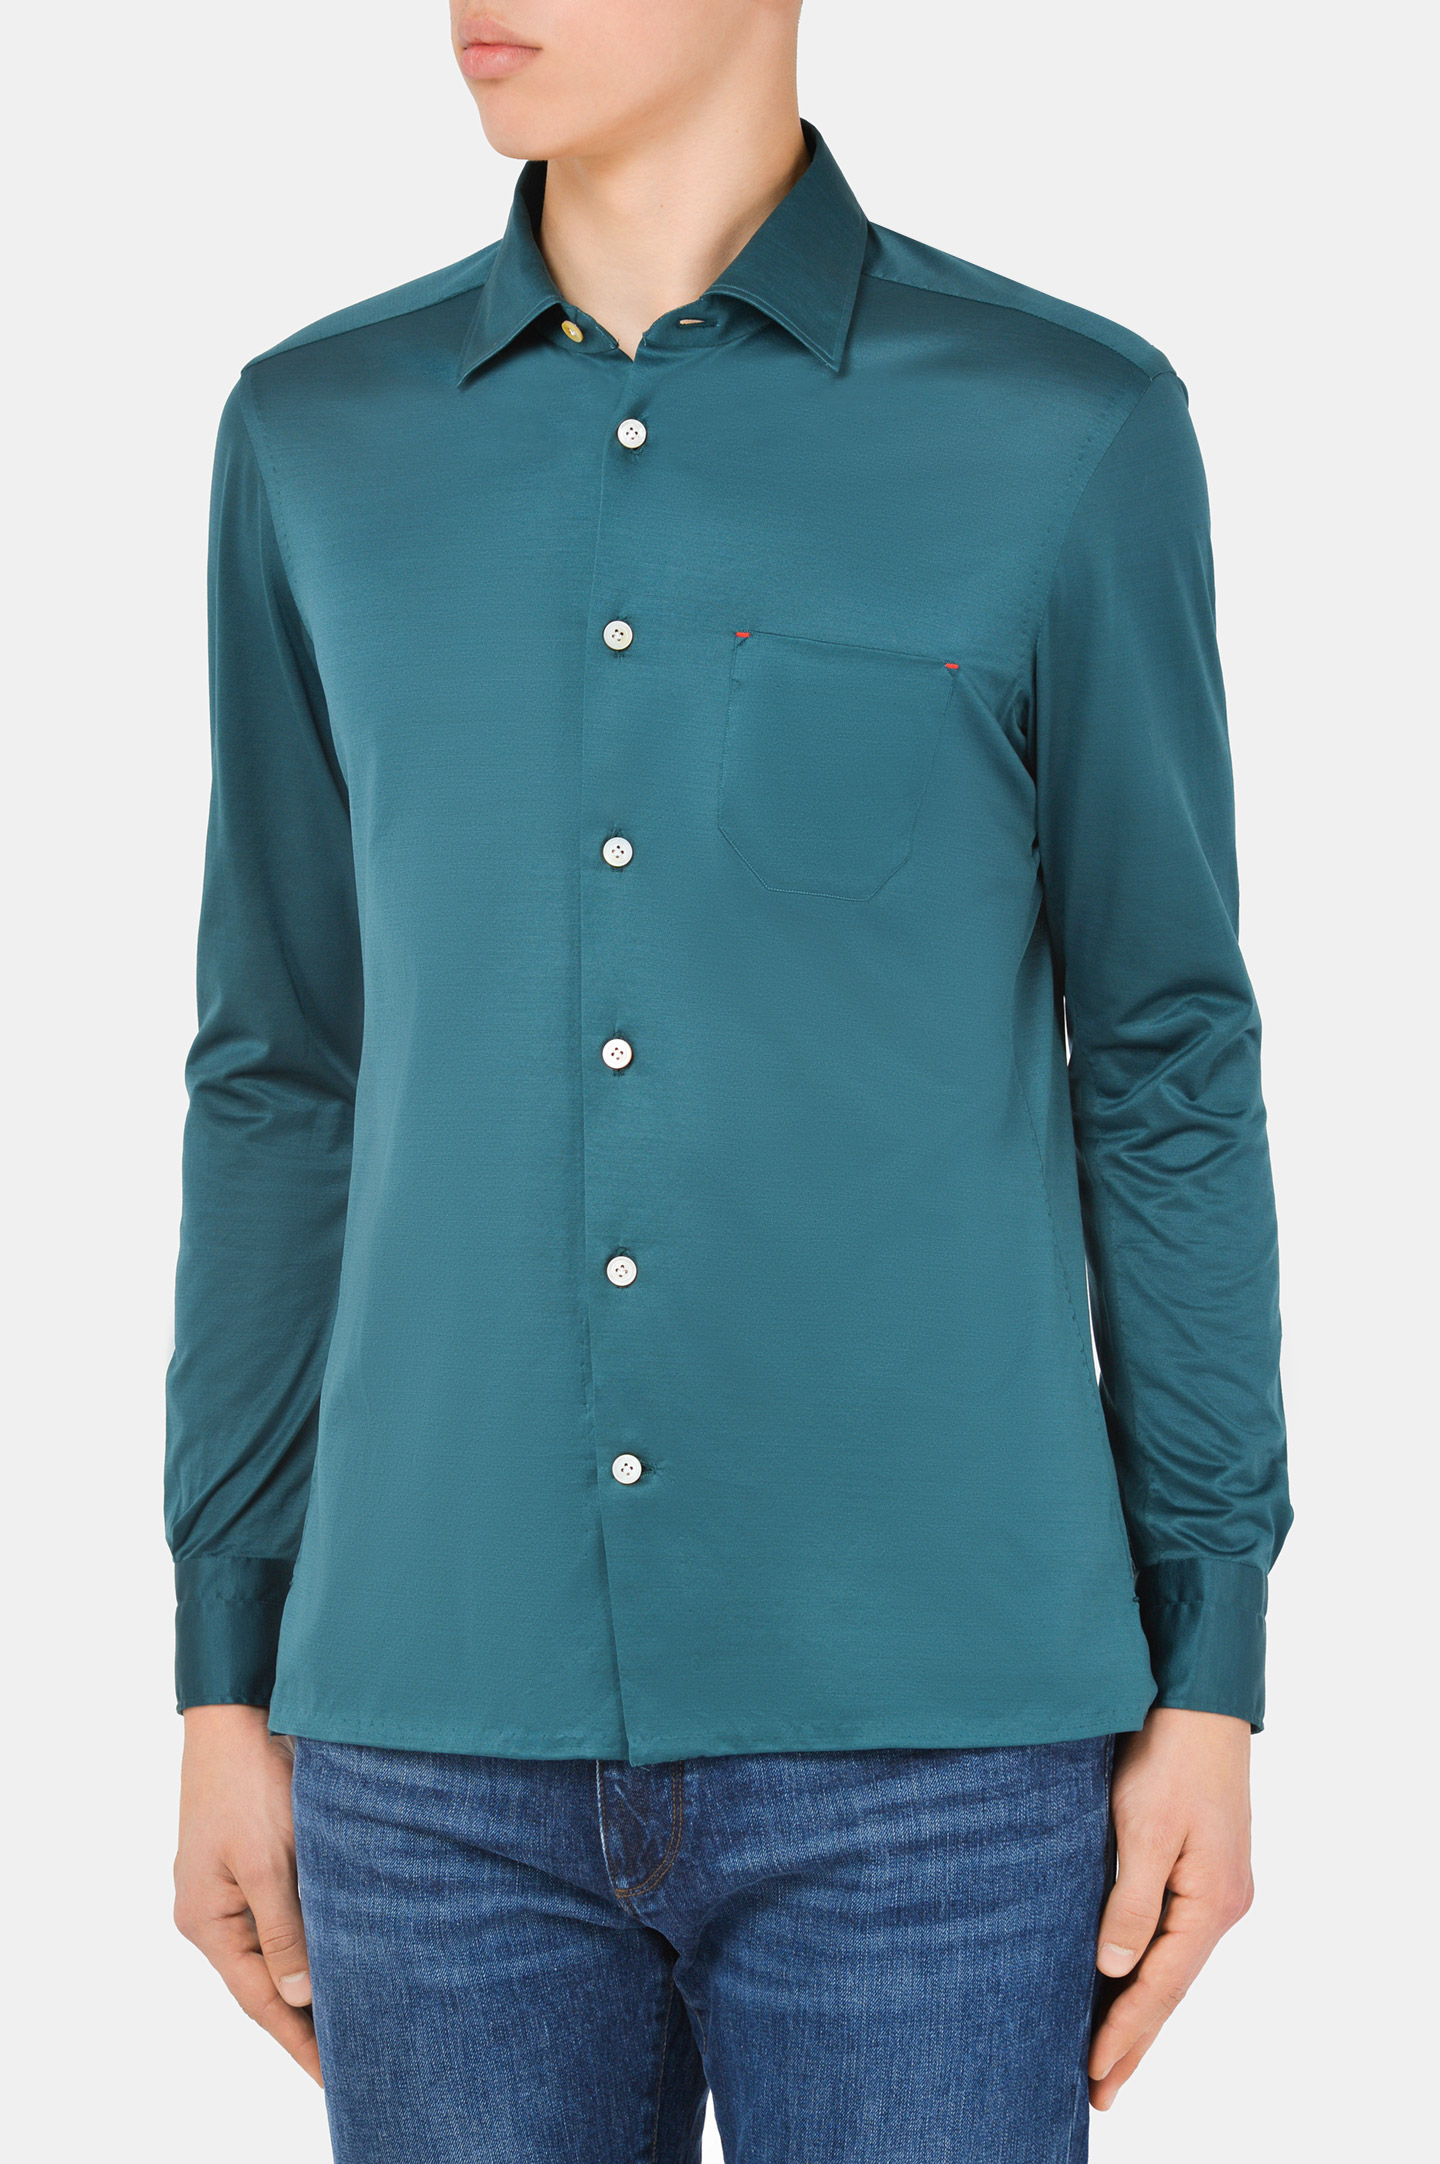 Рубашка (Сорочка) KITON UMCNERH074571, цвет: Бирюзовый, Мужской